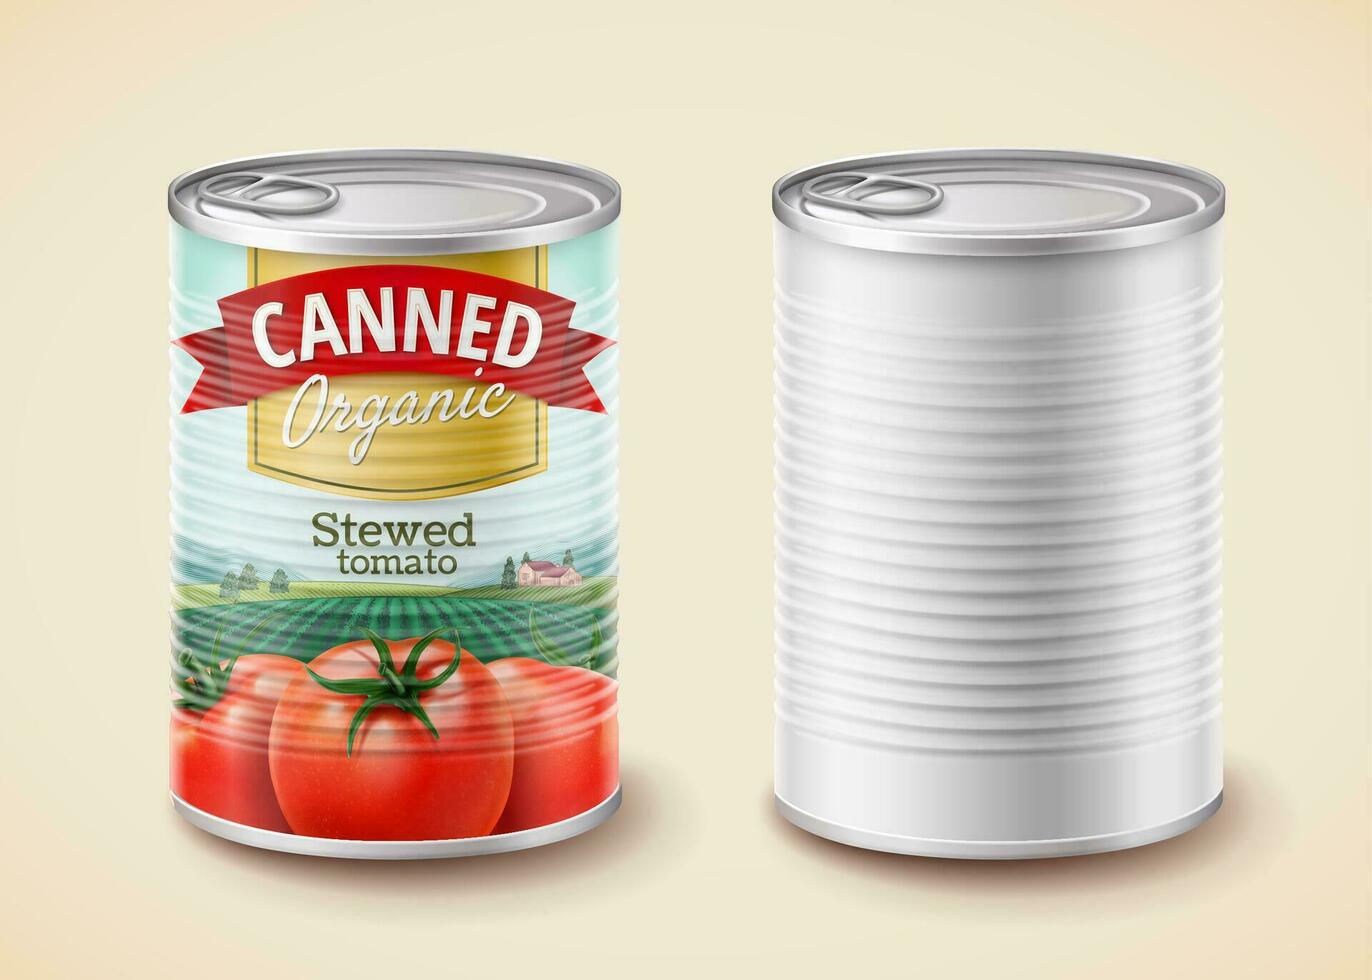 konserverad stuvad tomat paket design i 3d illustration vektor